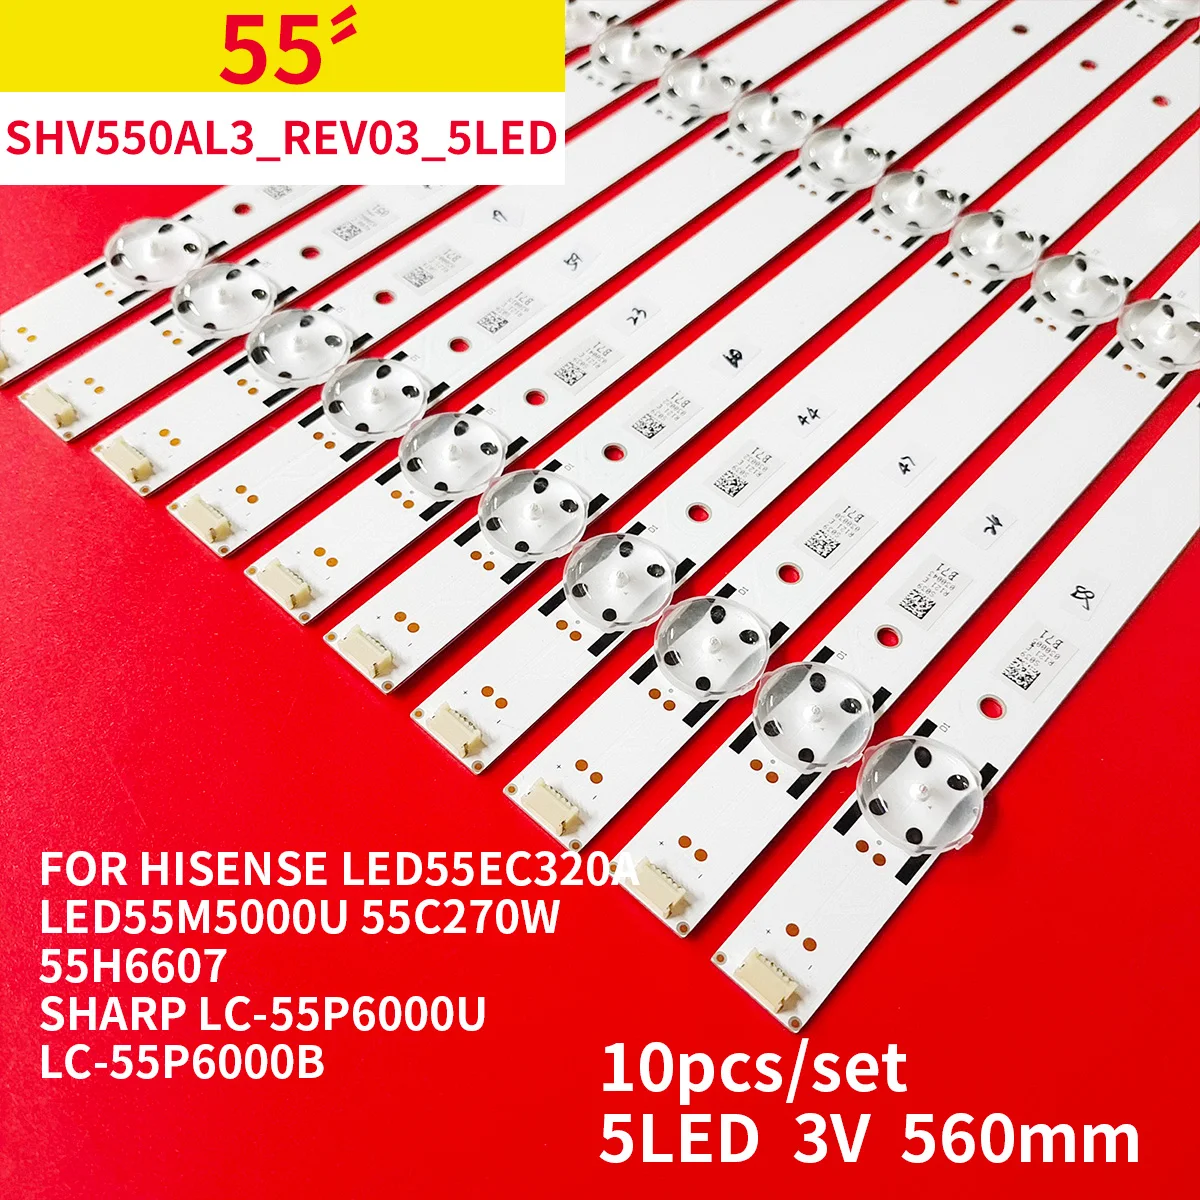 

LED Backlight strip for NS-55D420NA18 55H6607 LED55M5000U SVH550AL2 SHV550AL3_REV03_5LED SHARP LC-55P6000U LC-55P6000B